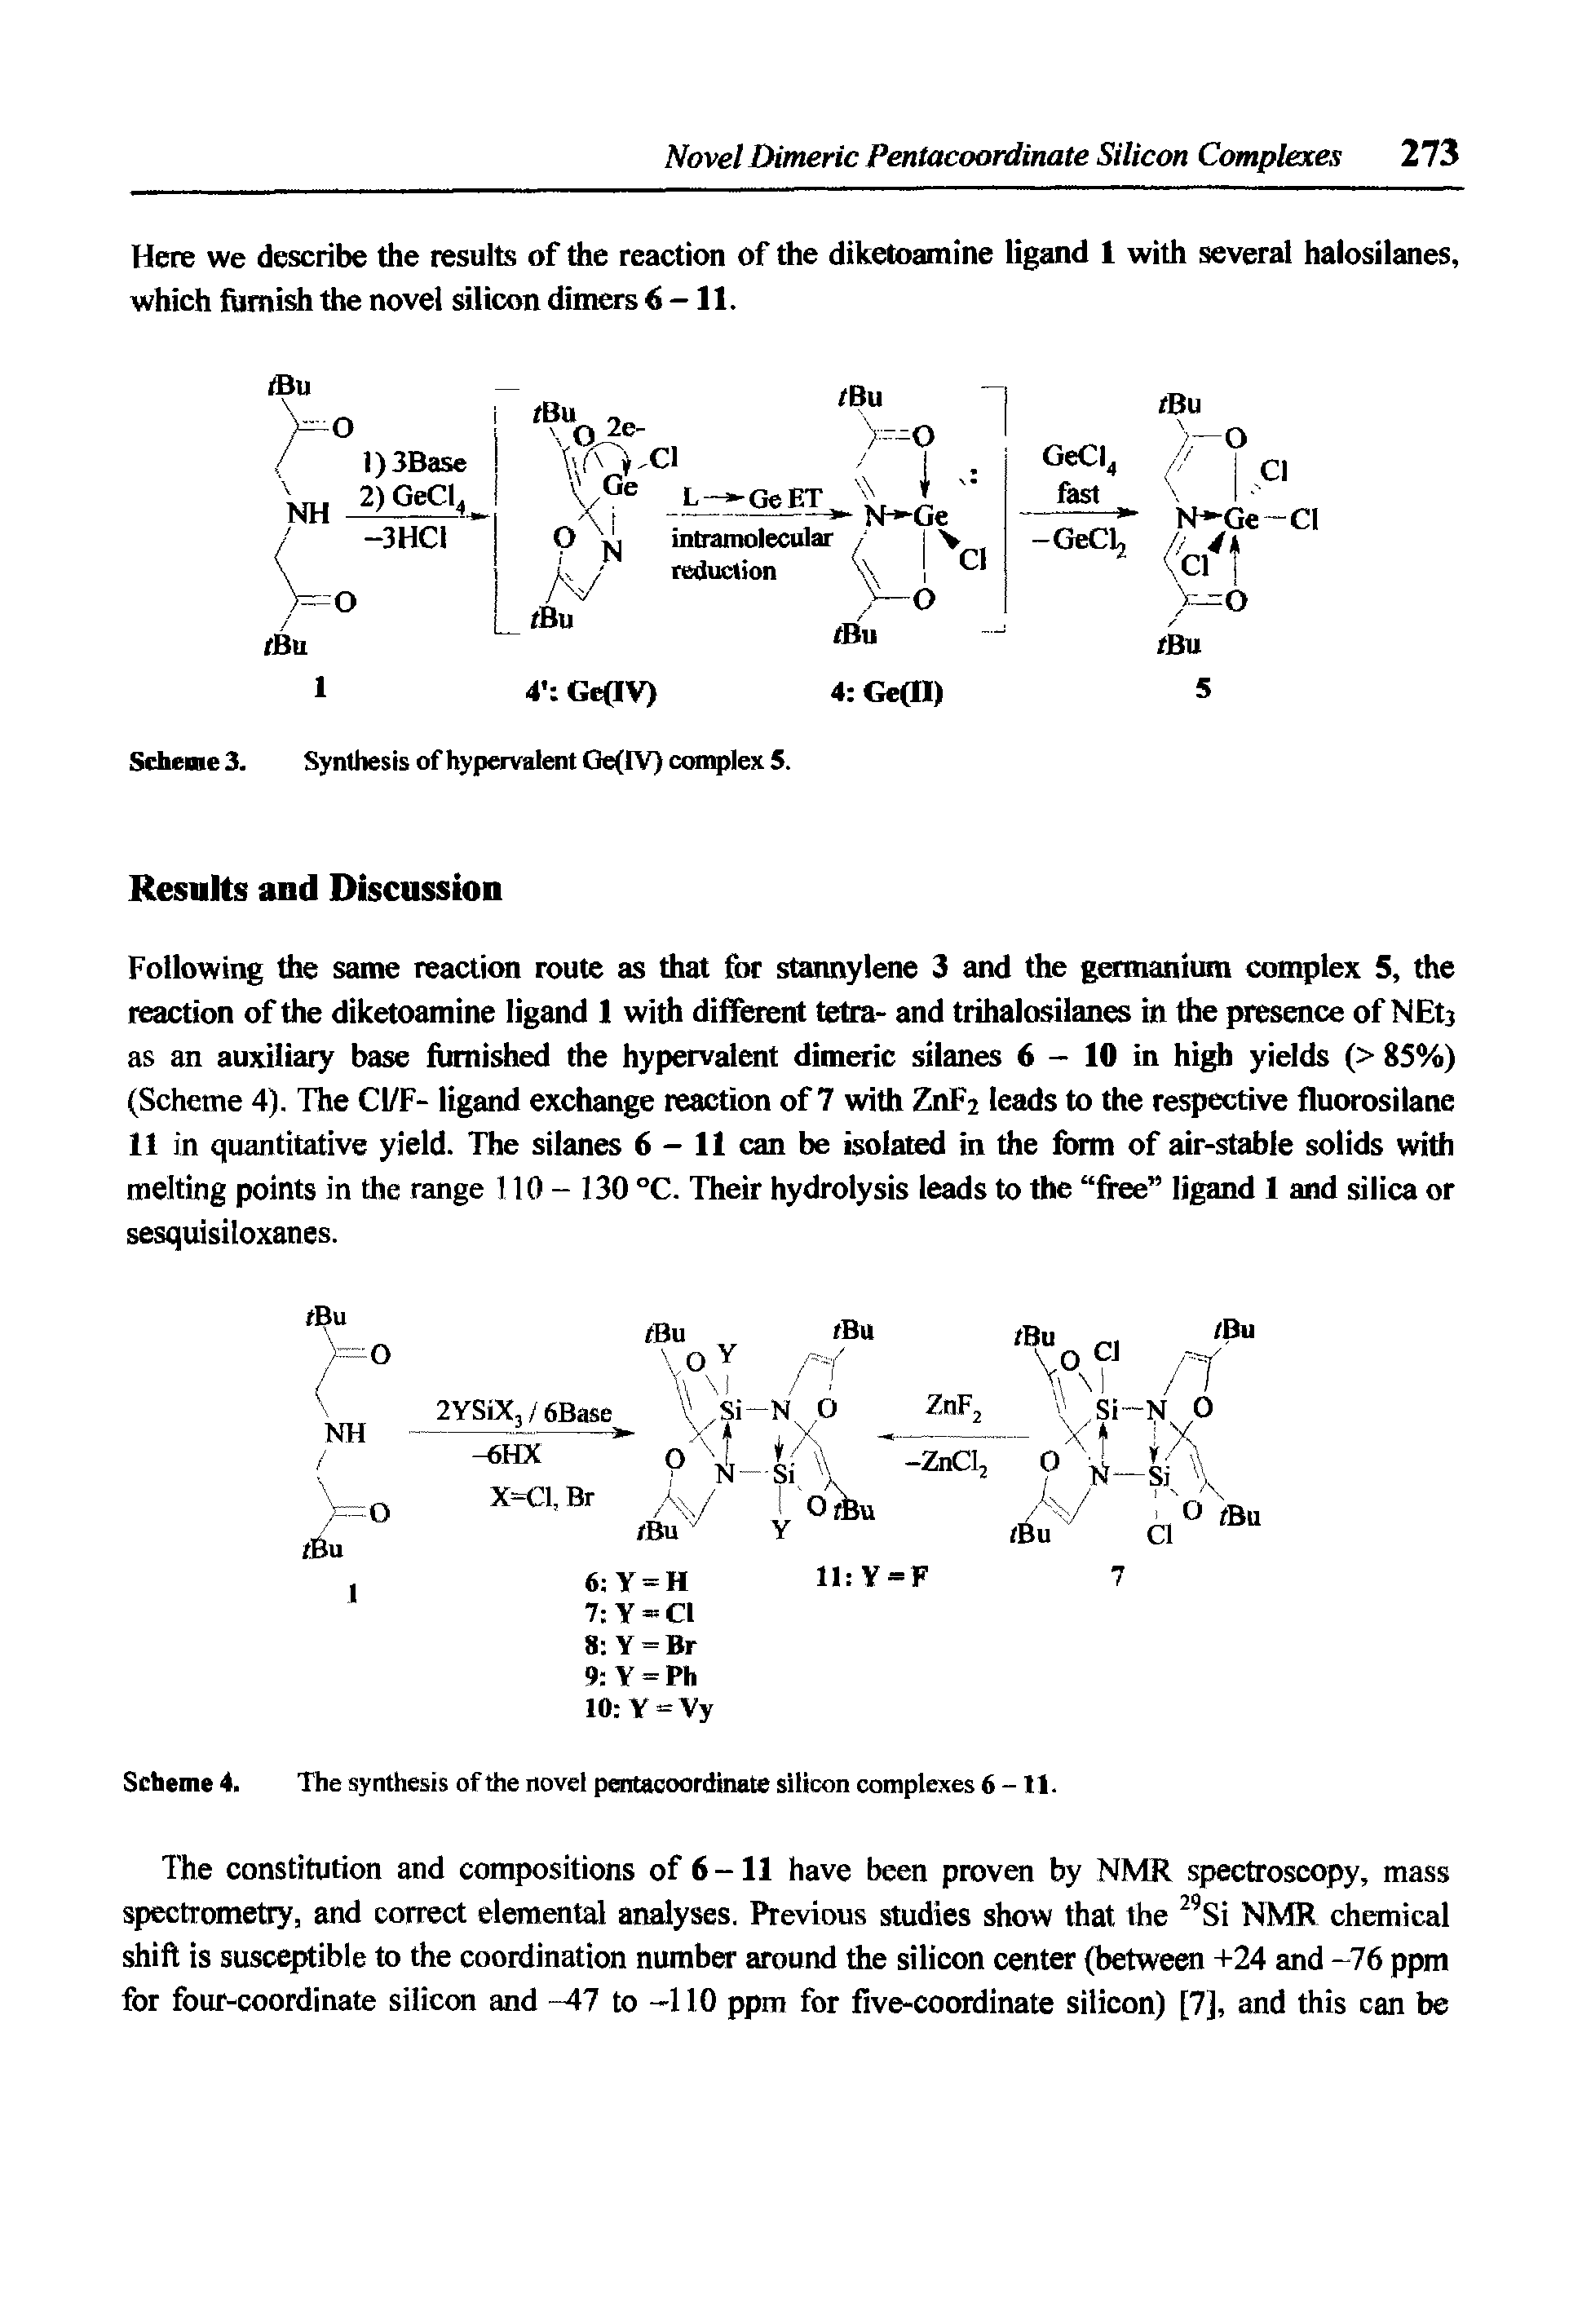 Scheme 4. The synthesis of the novel pentacoordinate silicon complexes 6 -11.